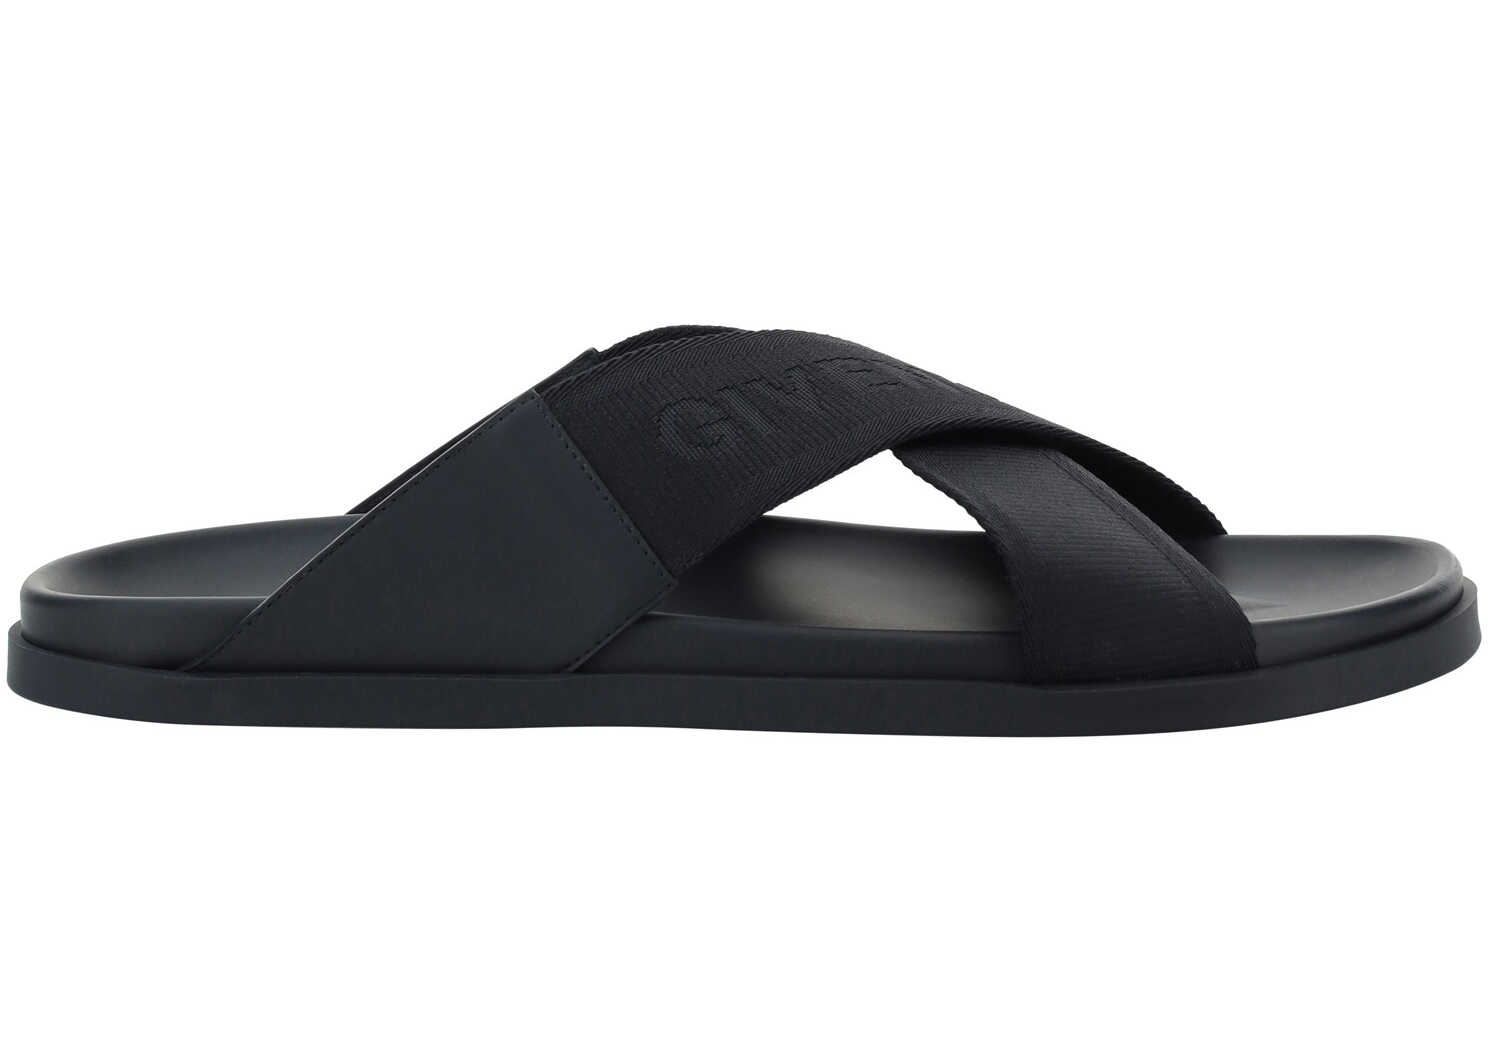 Givenchy Cross Strap Sandals BLACK image6